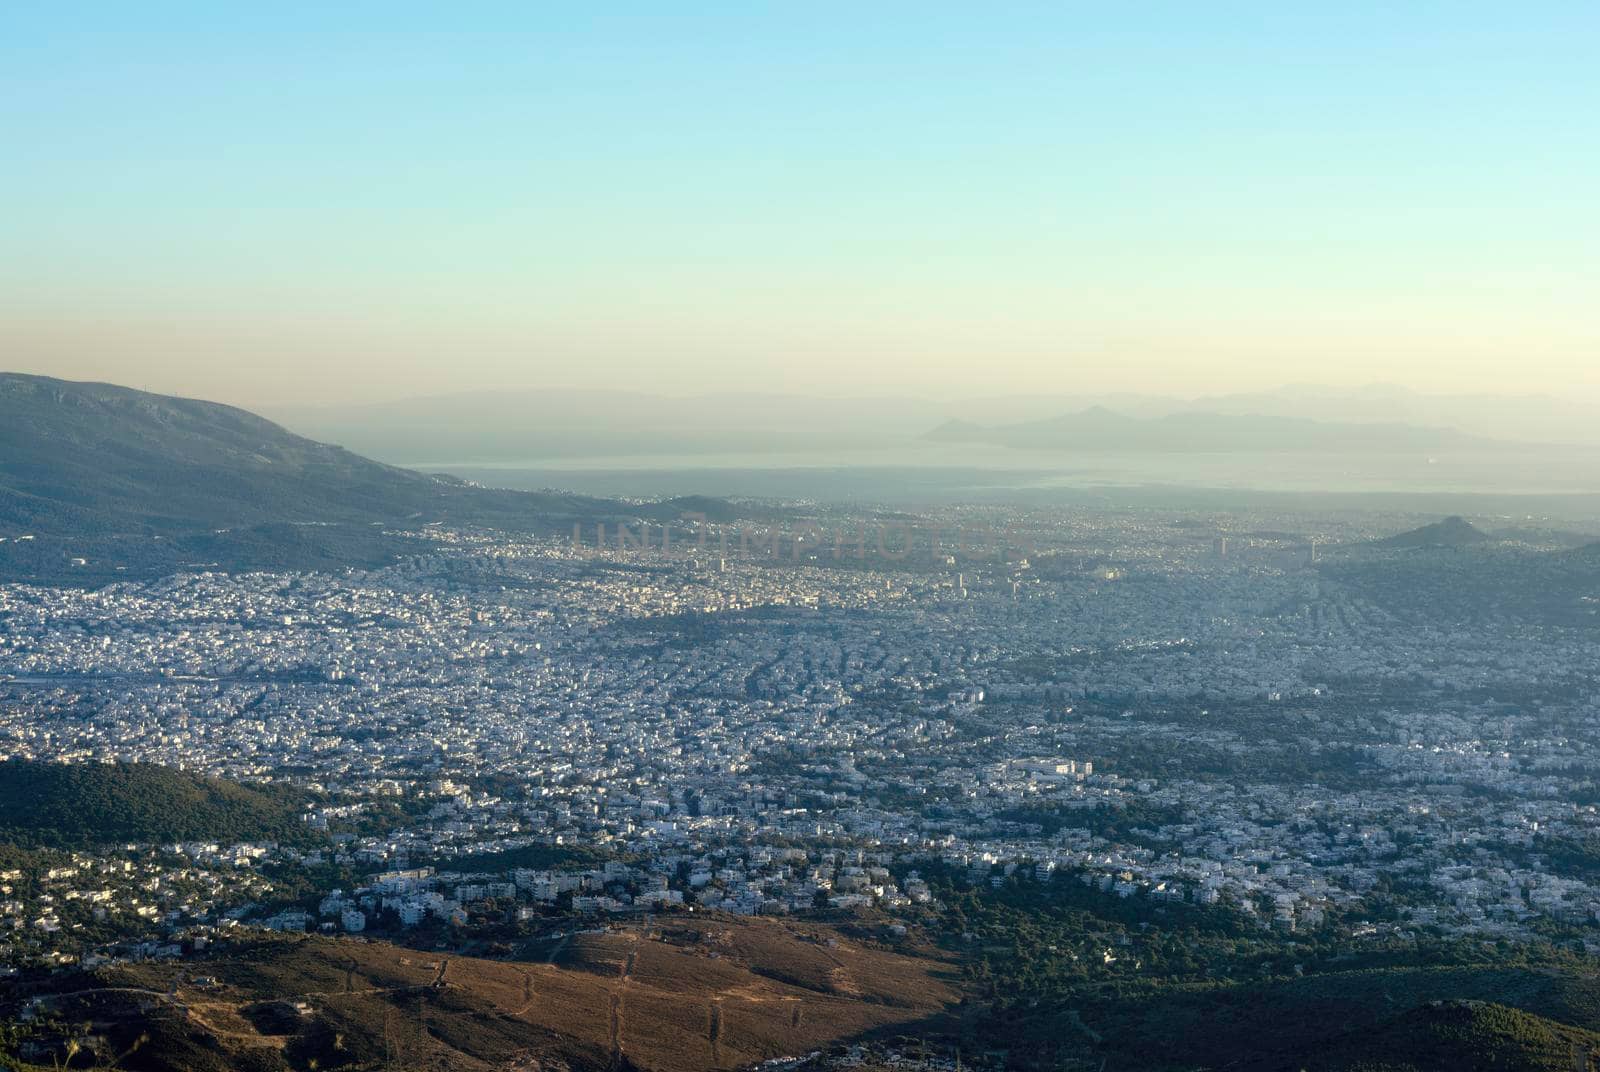 Panoramic view over Athens, taken shot from Penteli mountain.